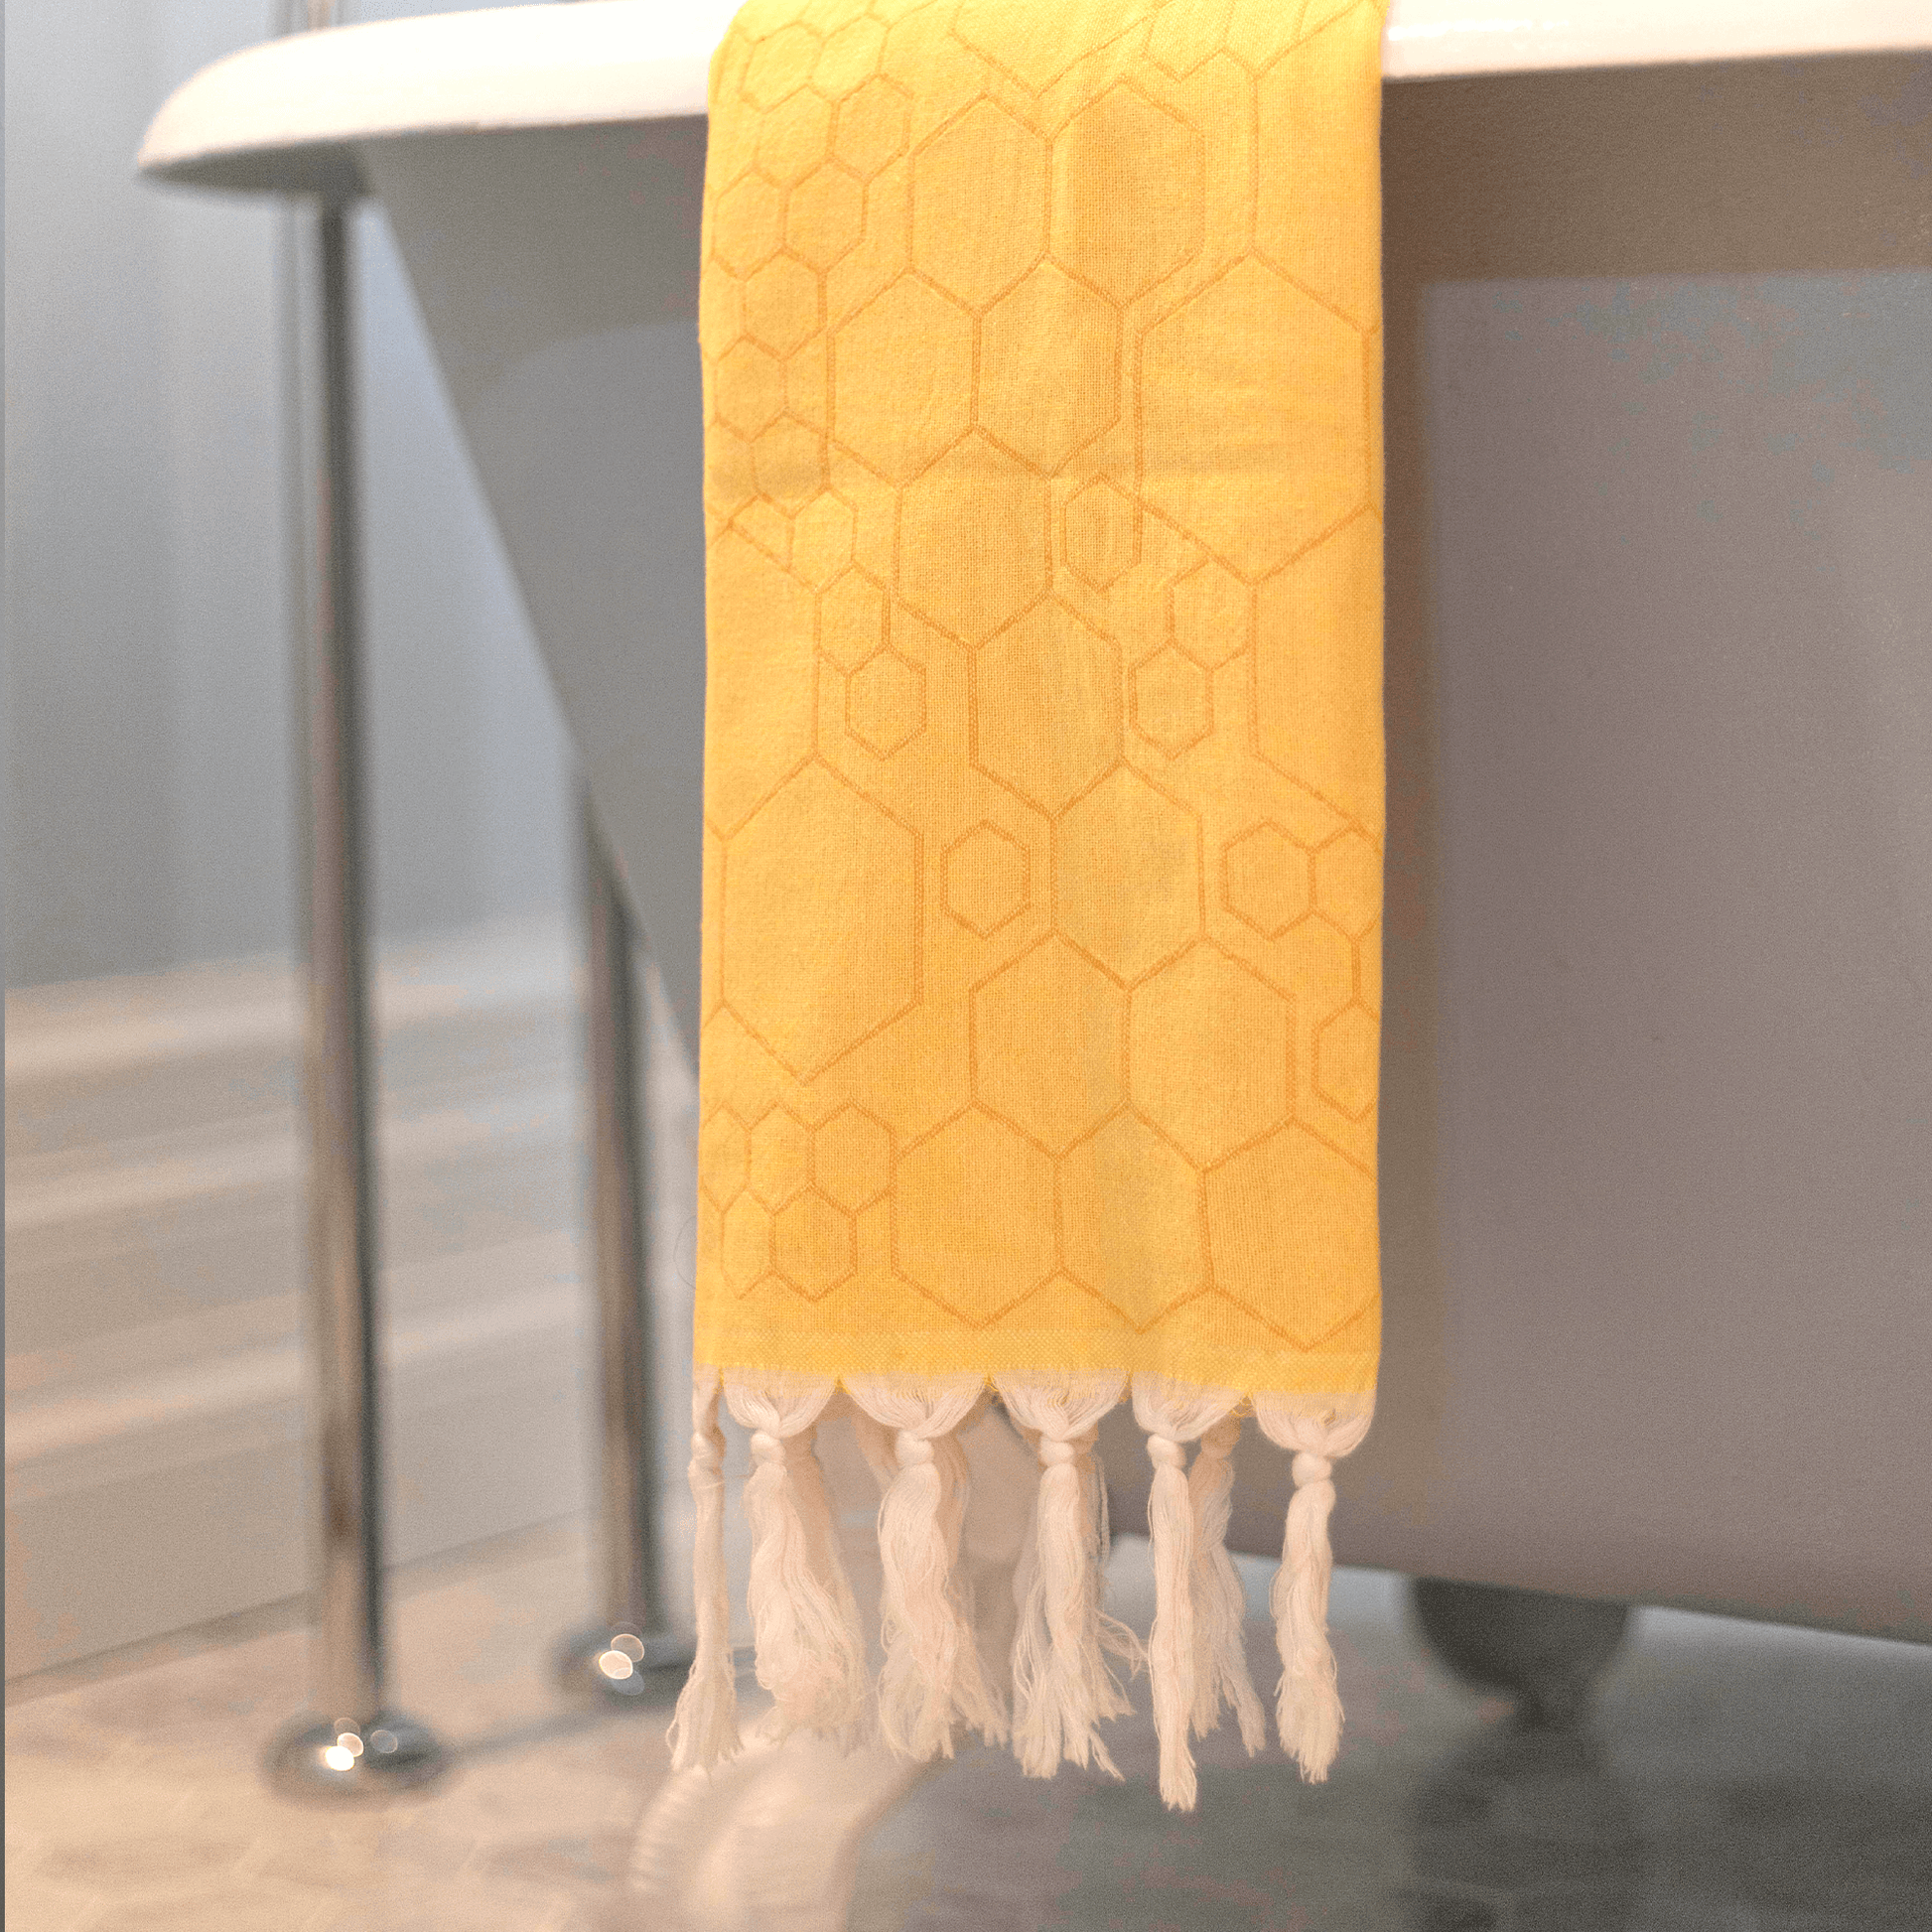 Yellow and orange Turkish towel in the bath